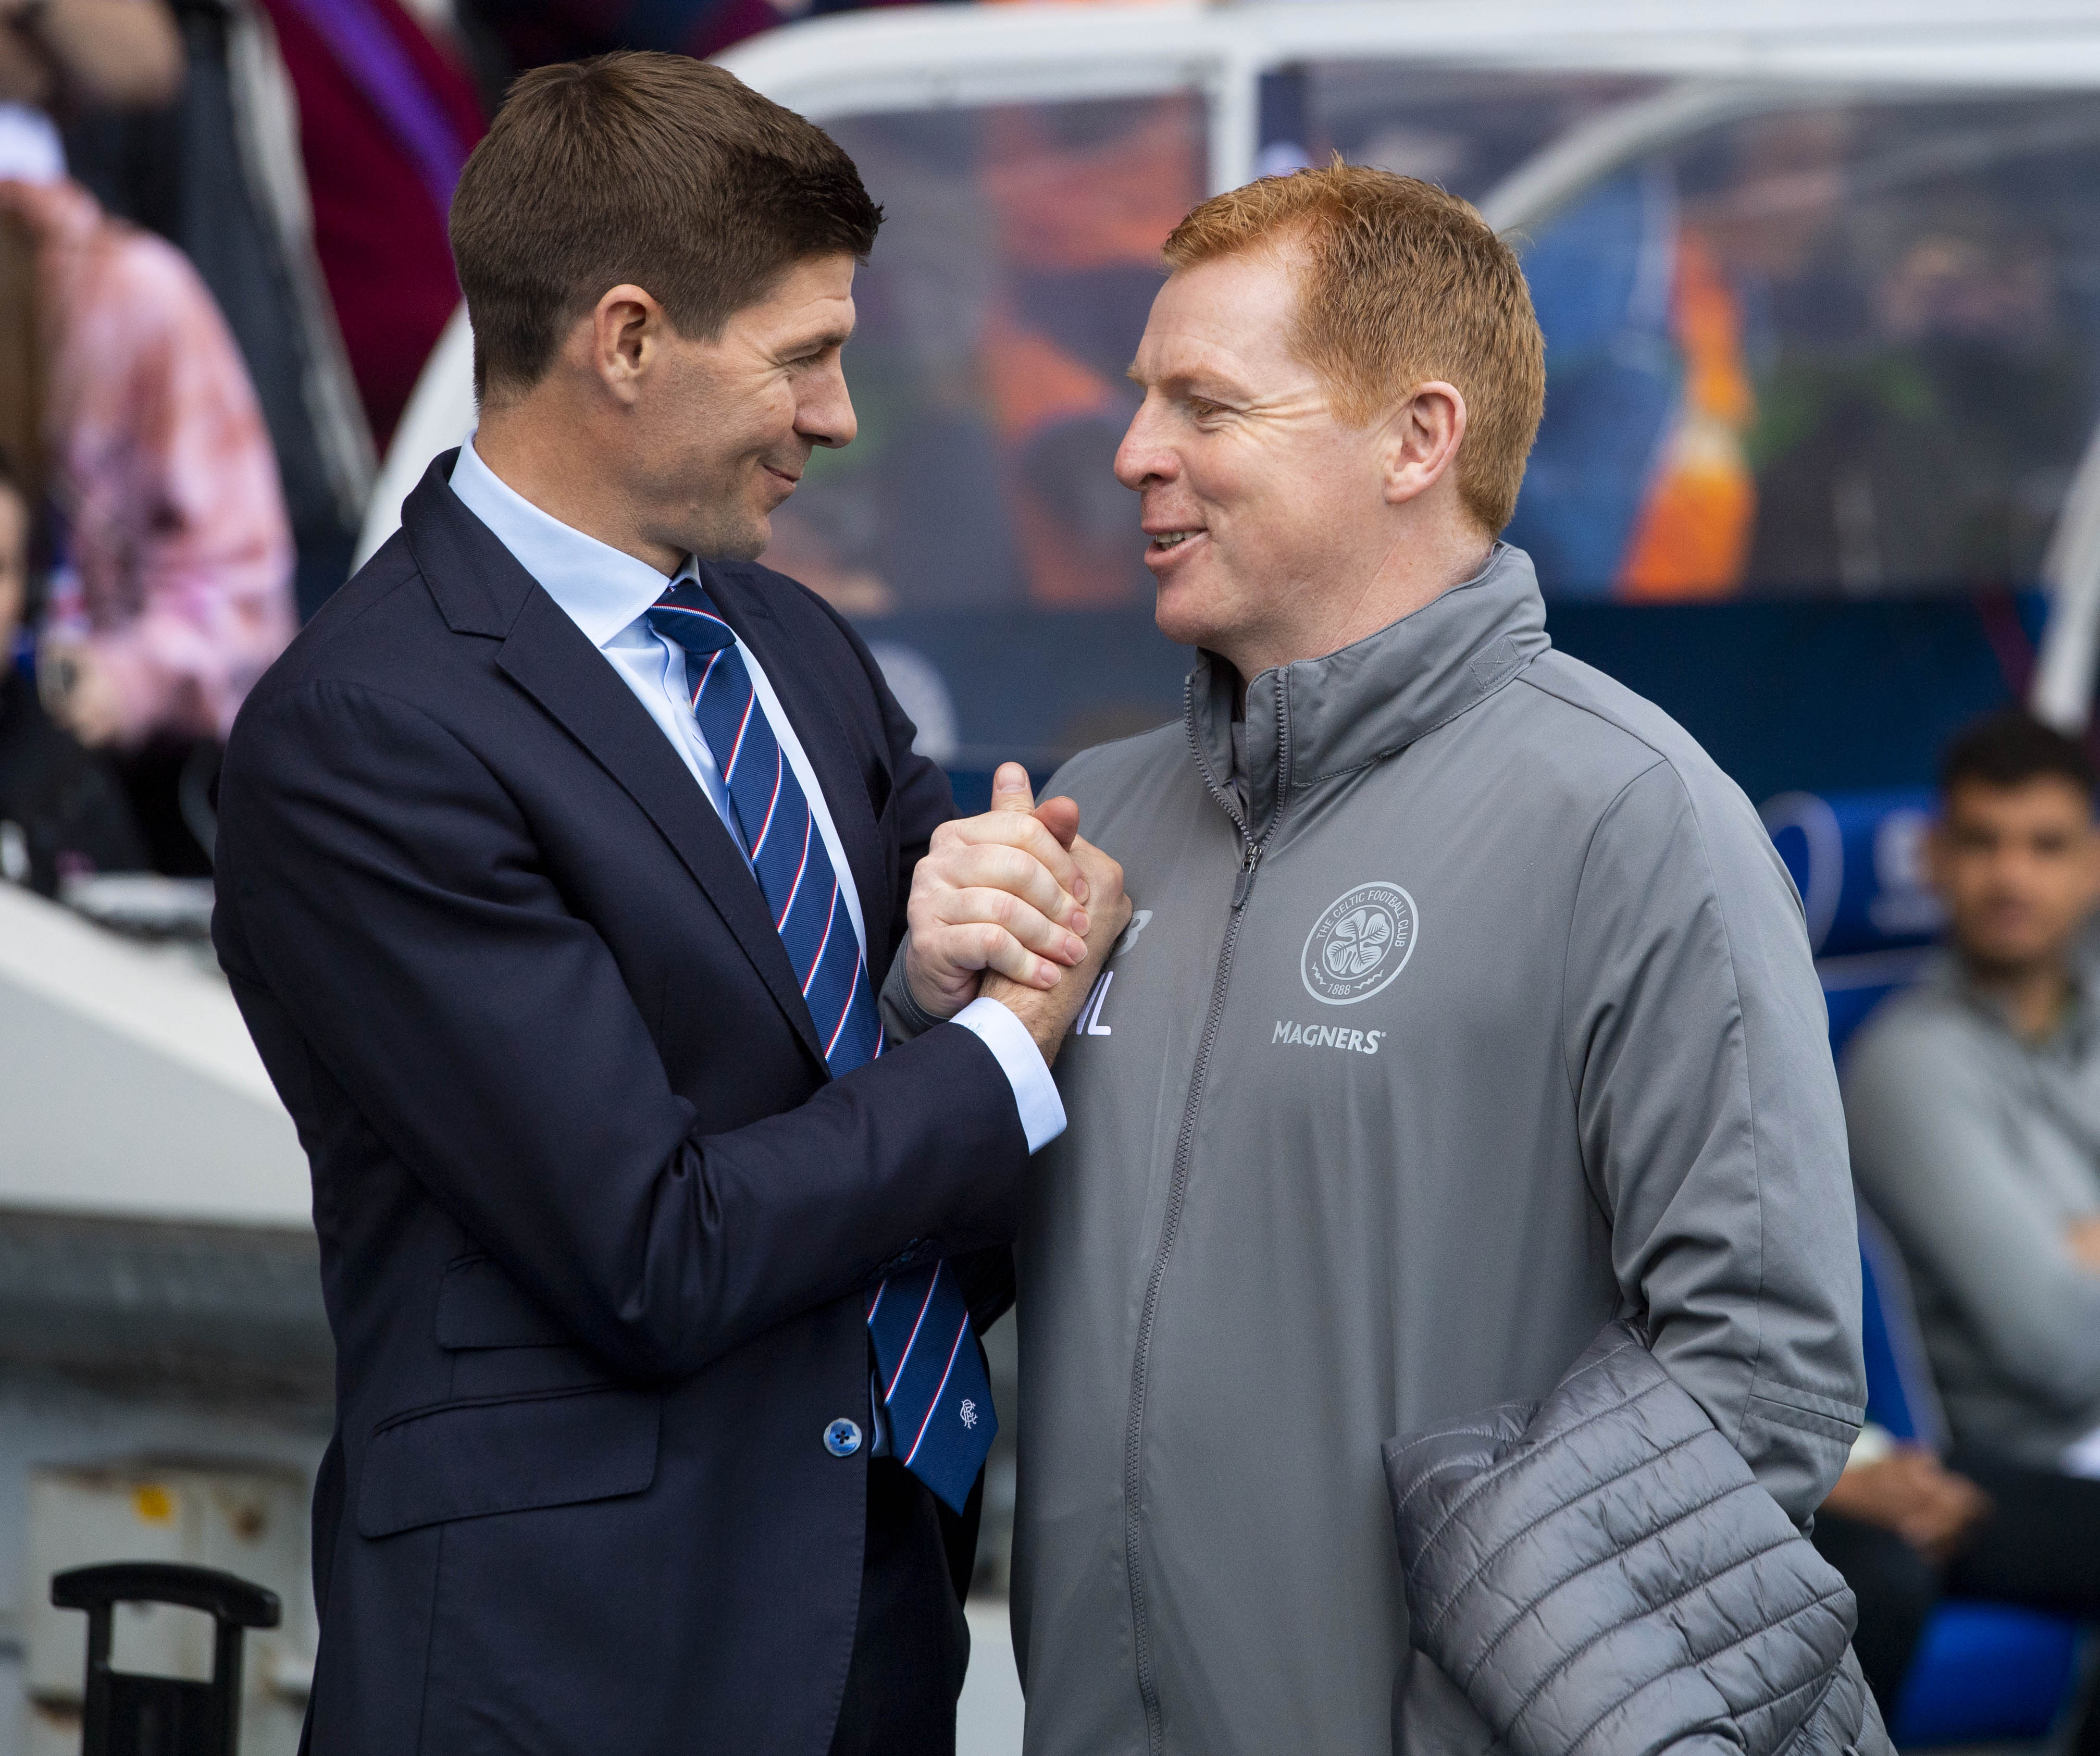 Rangers manager Steven Gerrard and Celtic manager Neil Lennon shake hands ahead of kick off